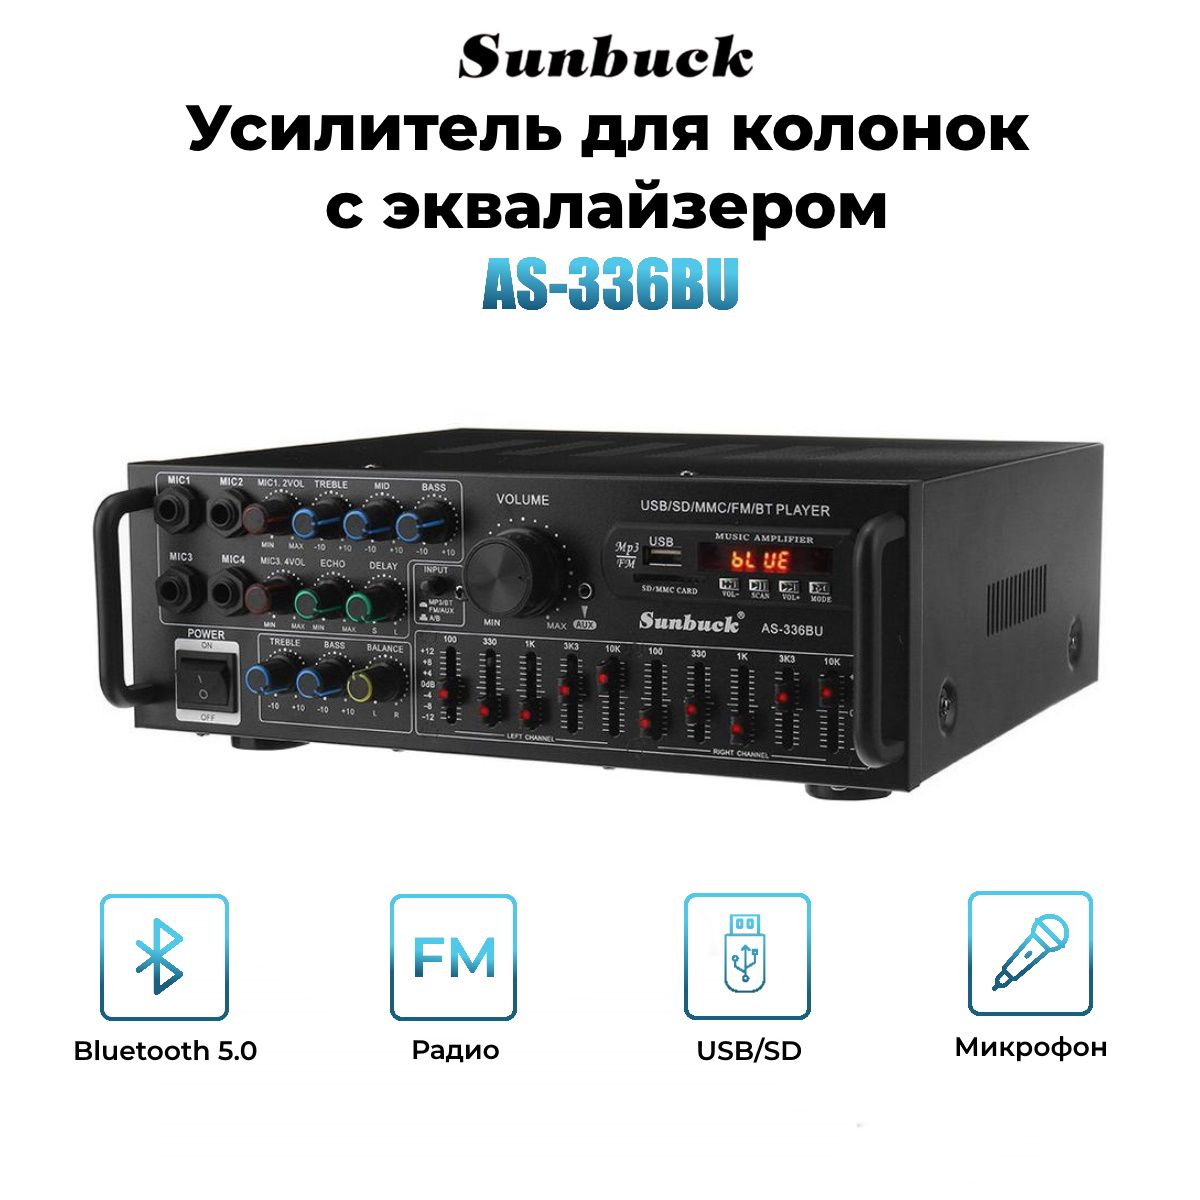 Sunbuck av 660bt. Аудио усилитель для колонок as-u336bu Bluetooth. Sunbuck as-336bu. Усилитель звука для колонок as-336bu. Sunbuck as-336bu органы управления.